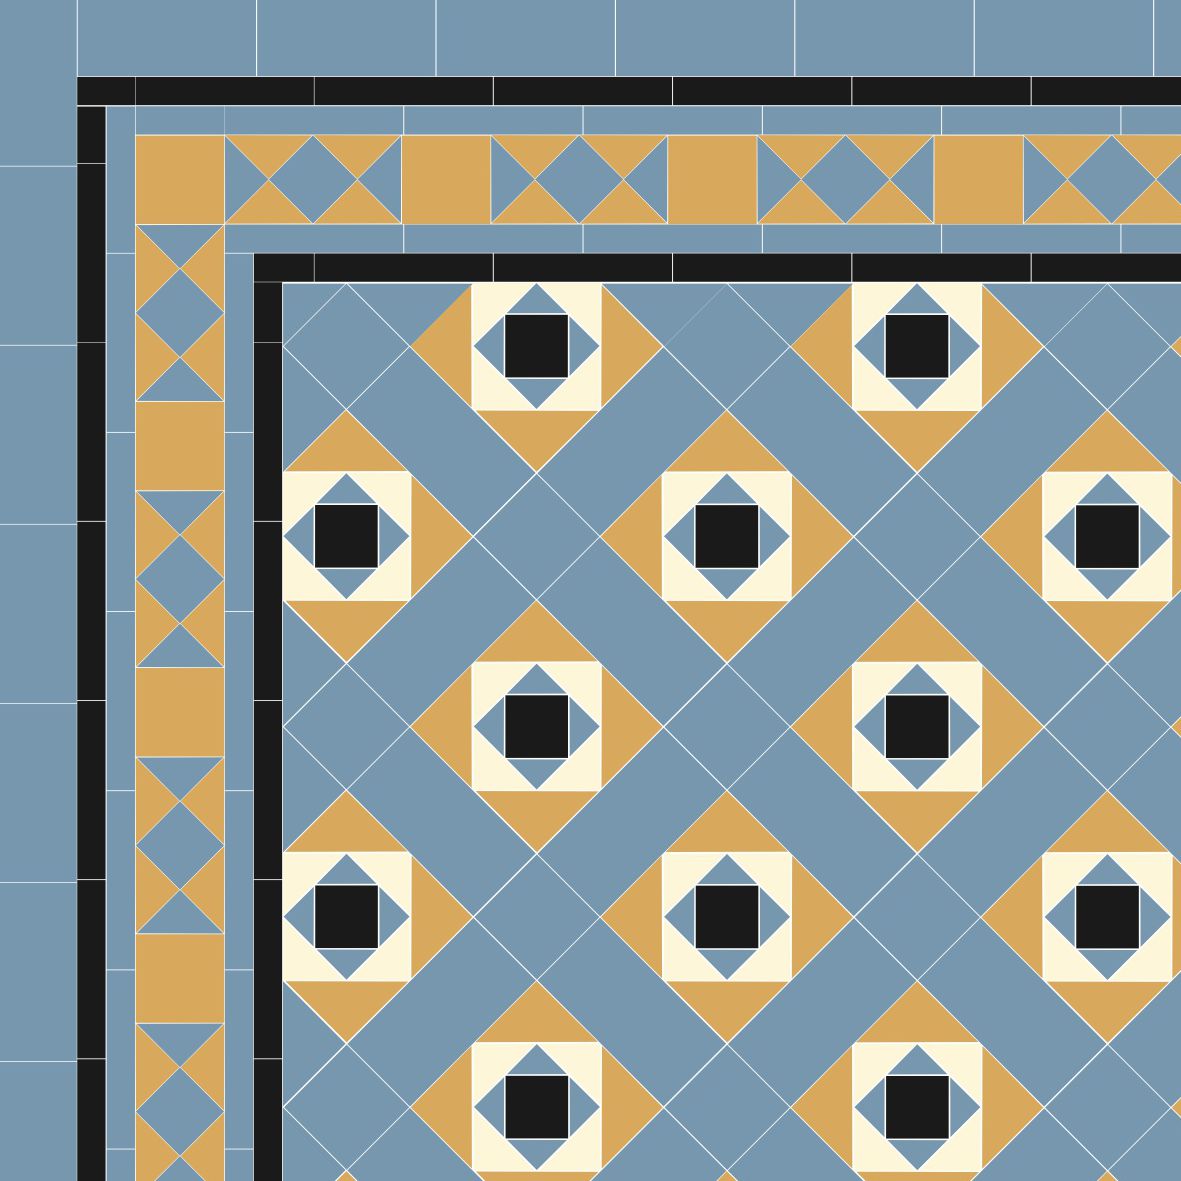 pattern 14